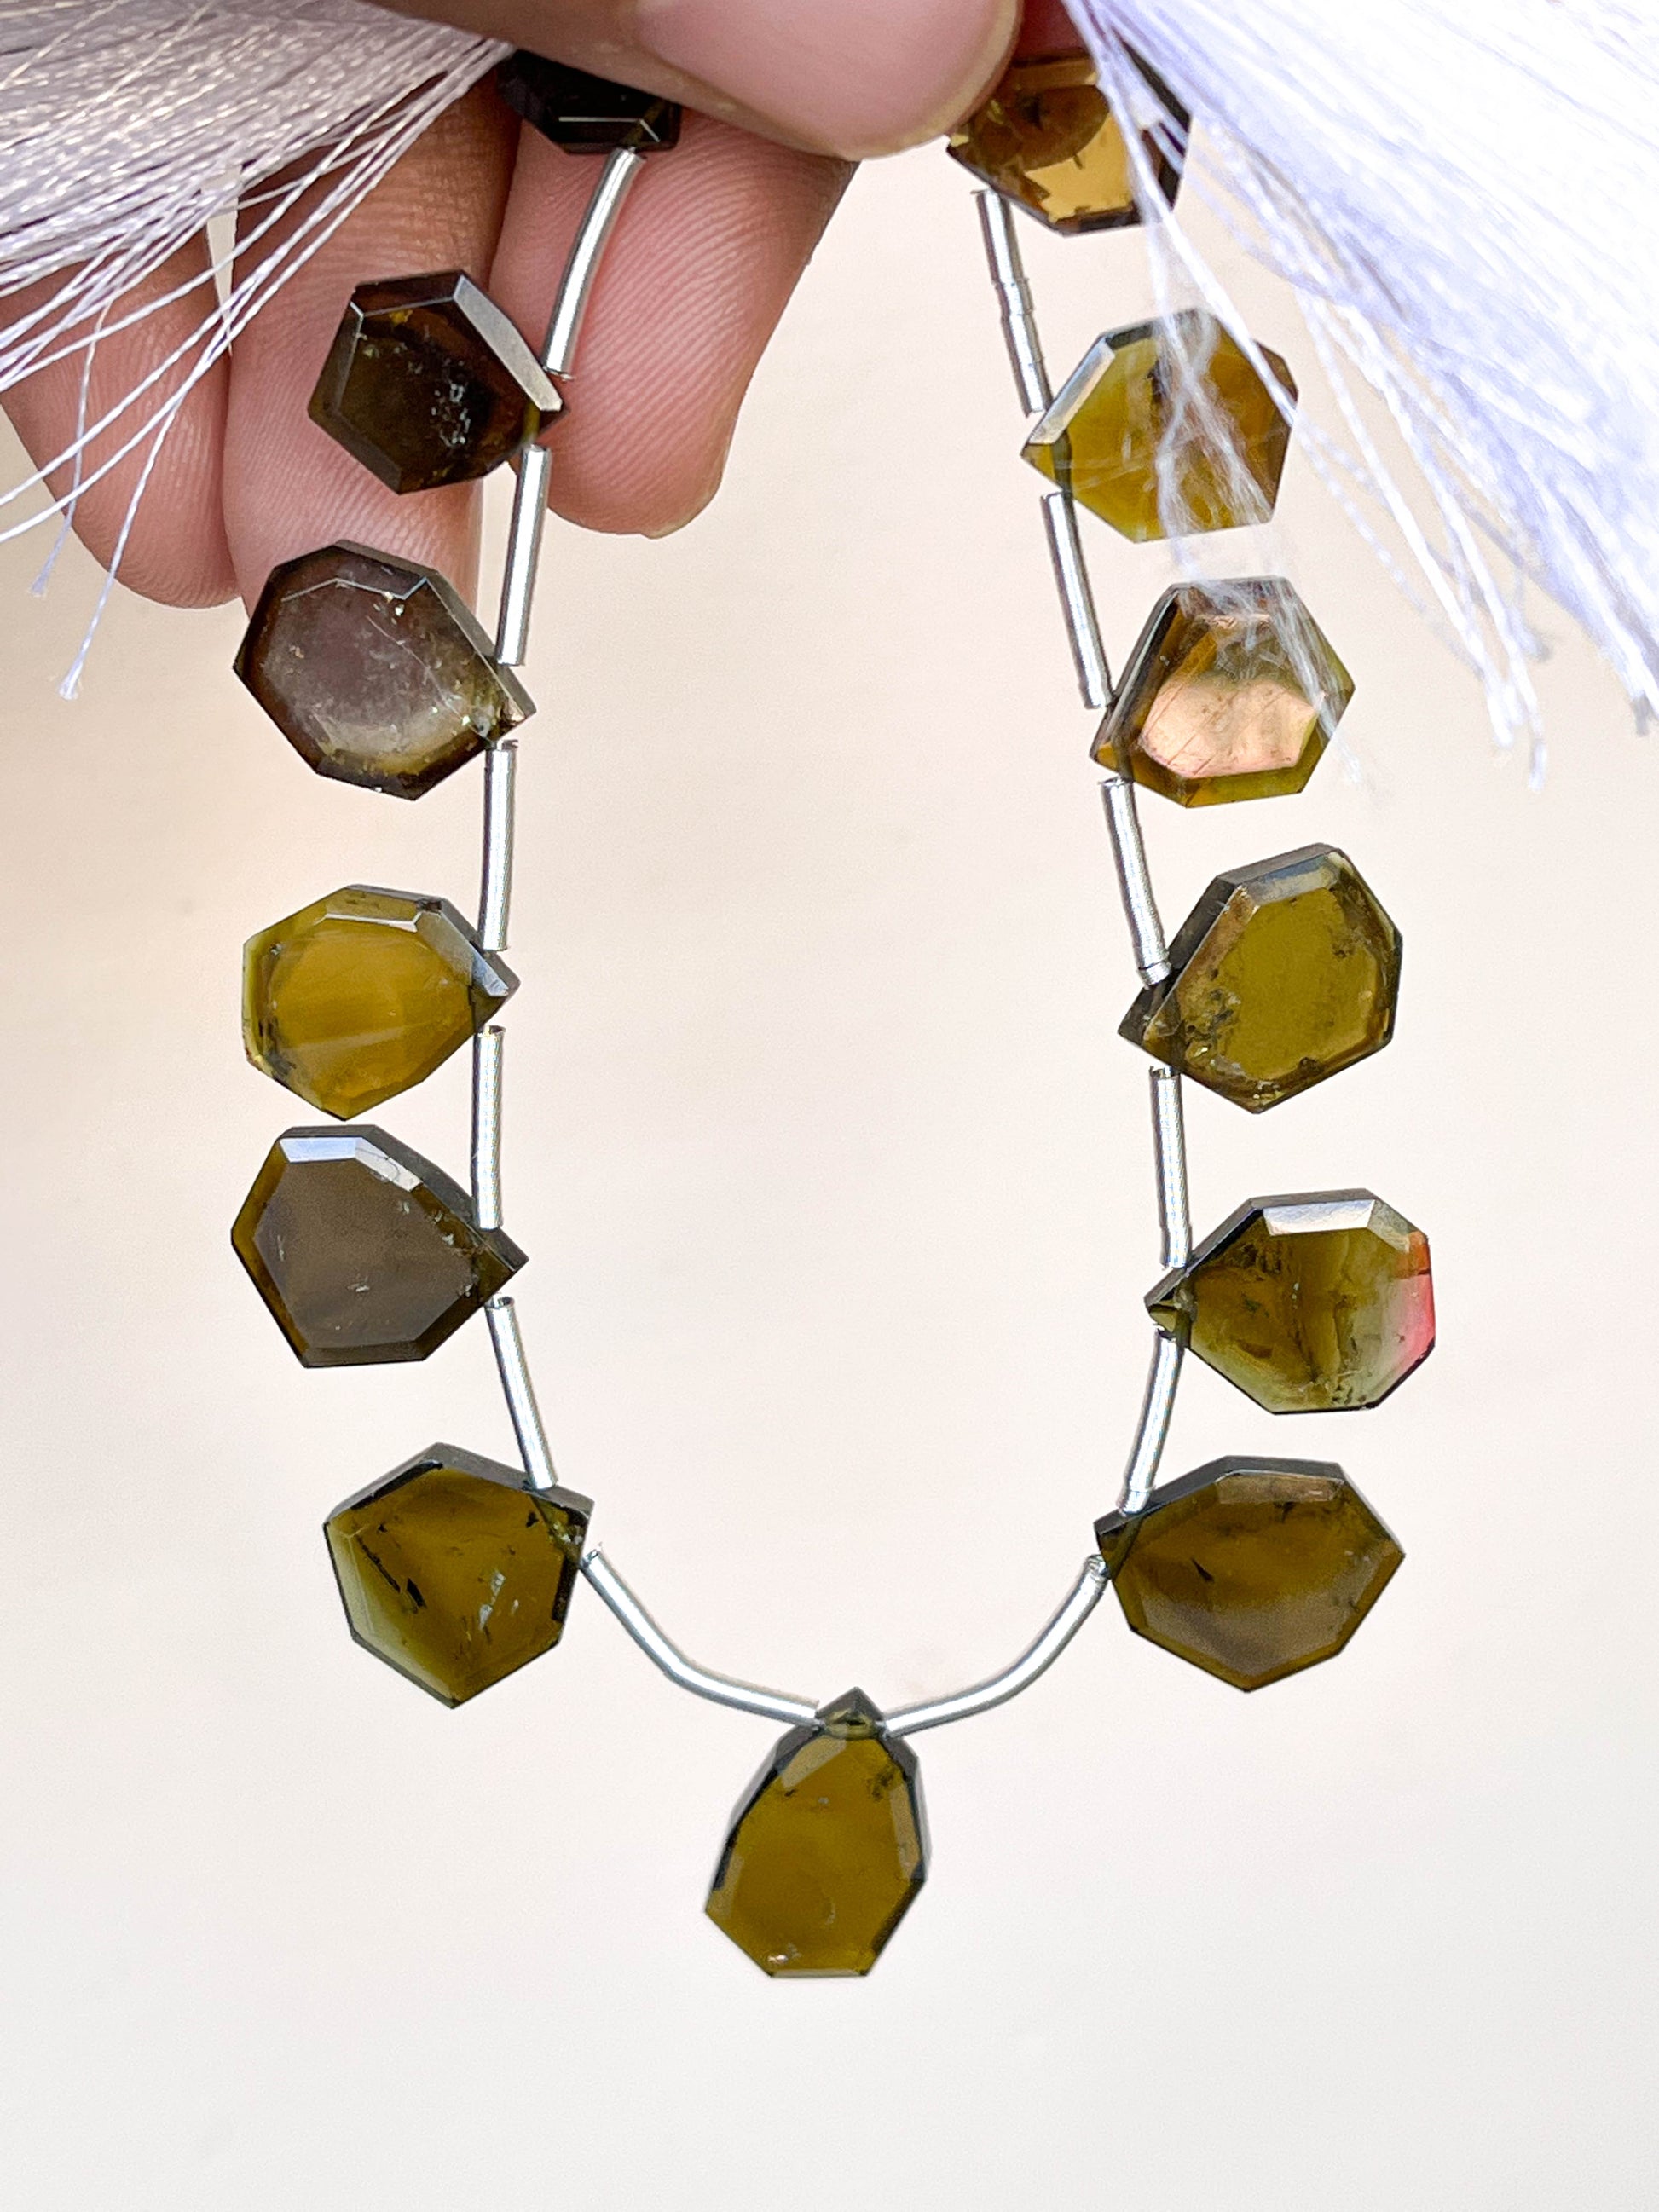 Green Tourmaline Slice cut beads Beadsforyourjewelry